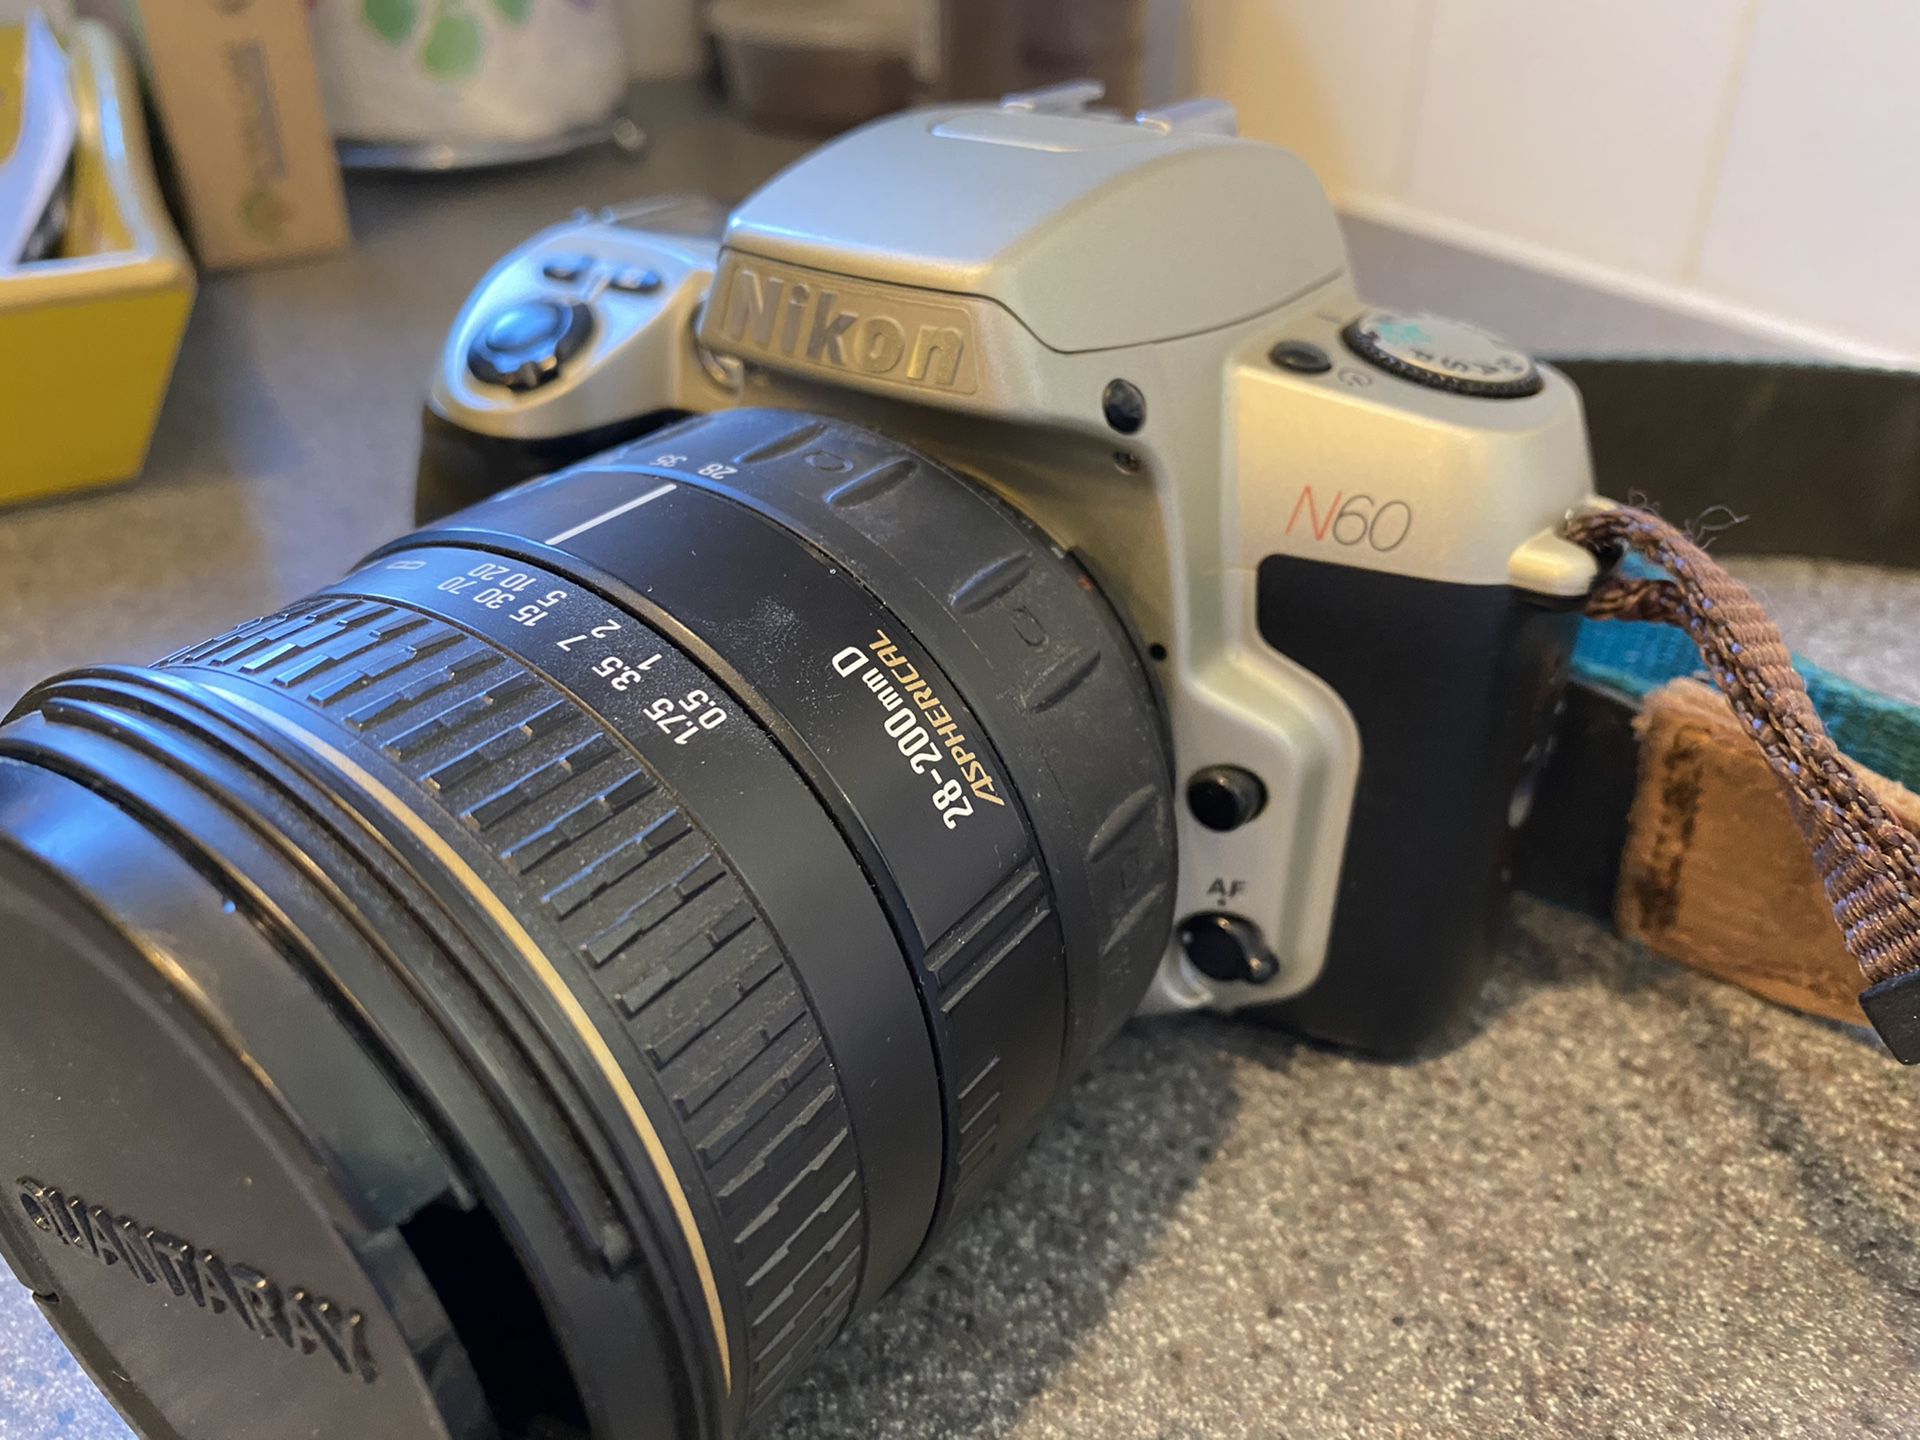 Nikon N60 SLR (film camera) with 28-200mmD Aspherical Lens (Quantaray)